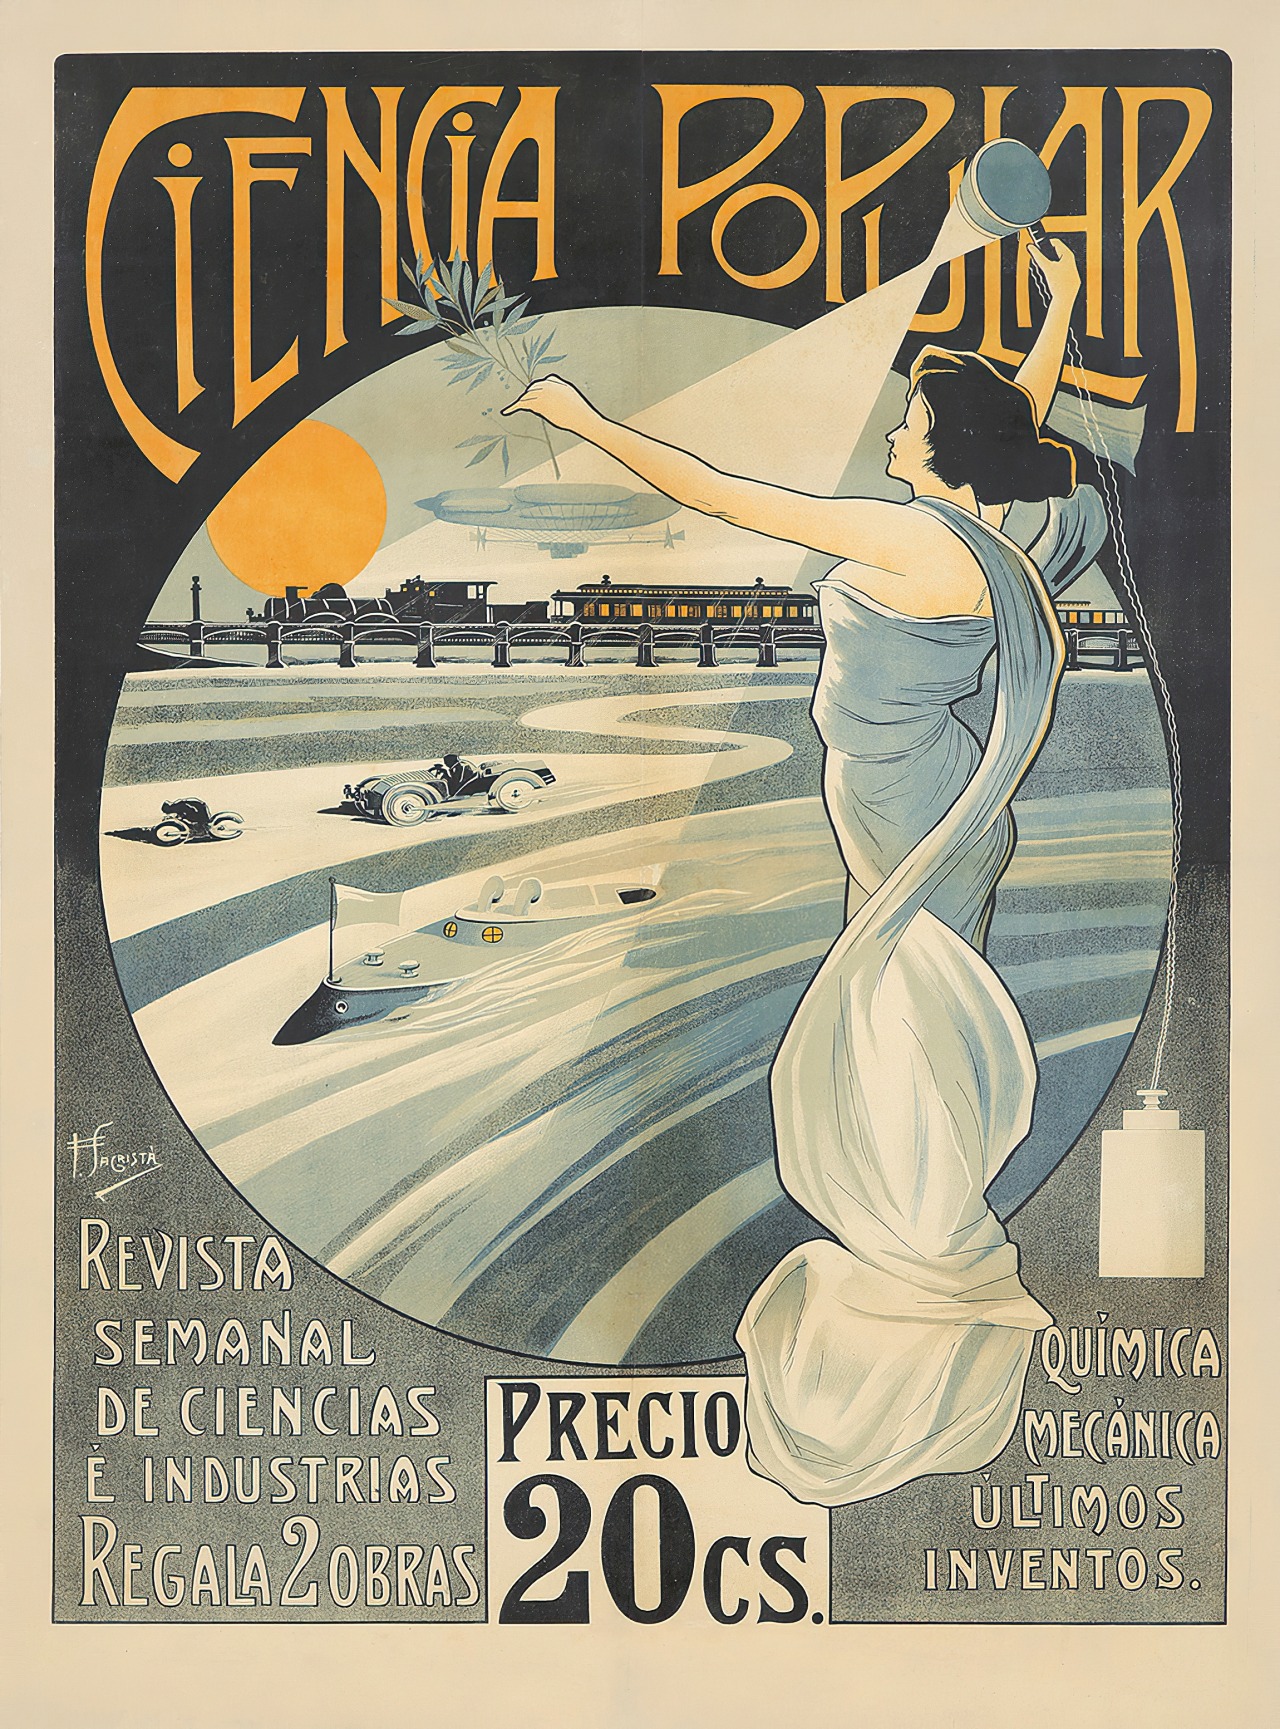 Ciencia Popular by F. Sagristá, 1915 #F. Sagristá #Ciencia Popular#1915#1910s#vintage#art#illustration